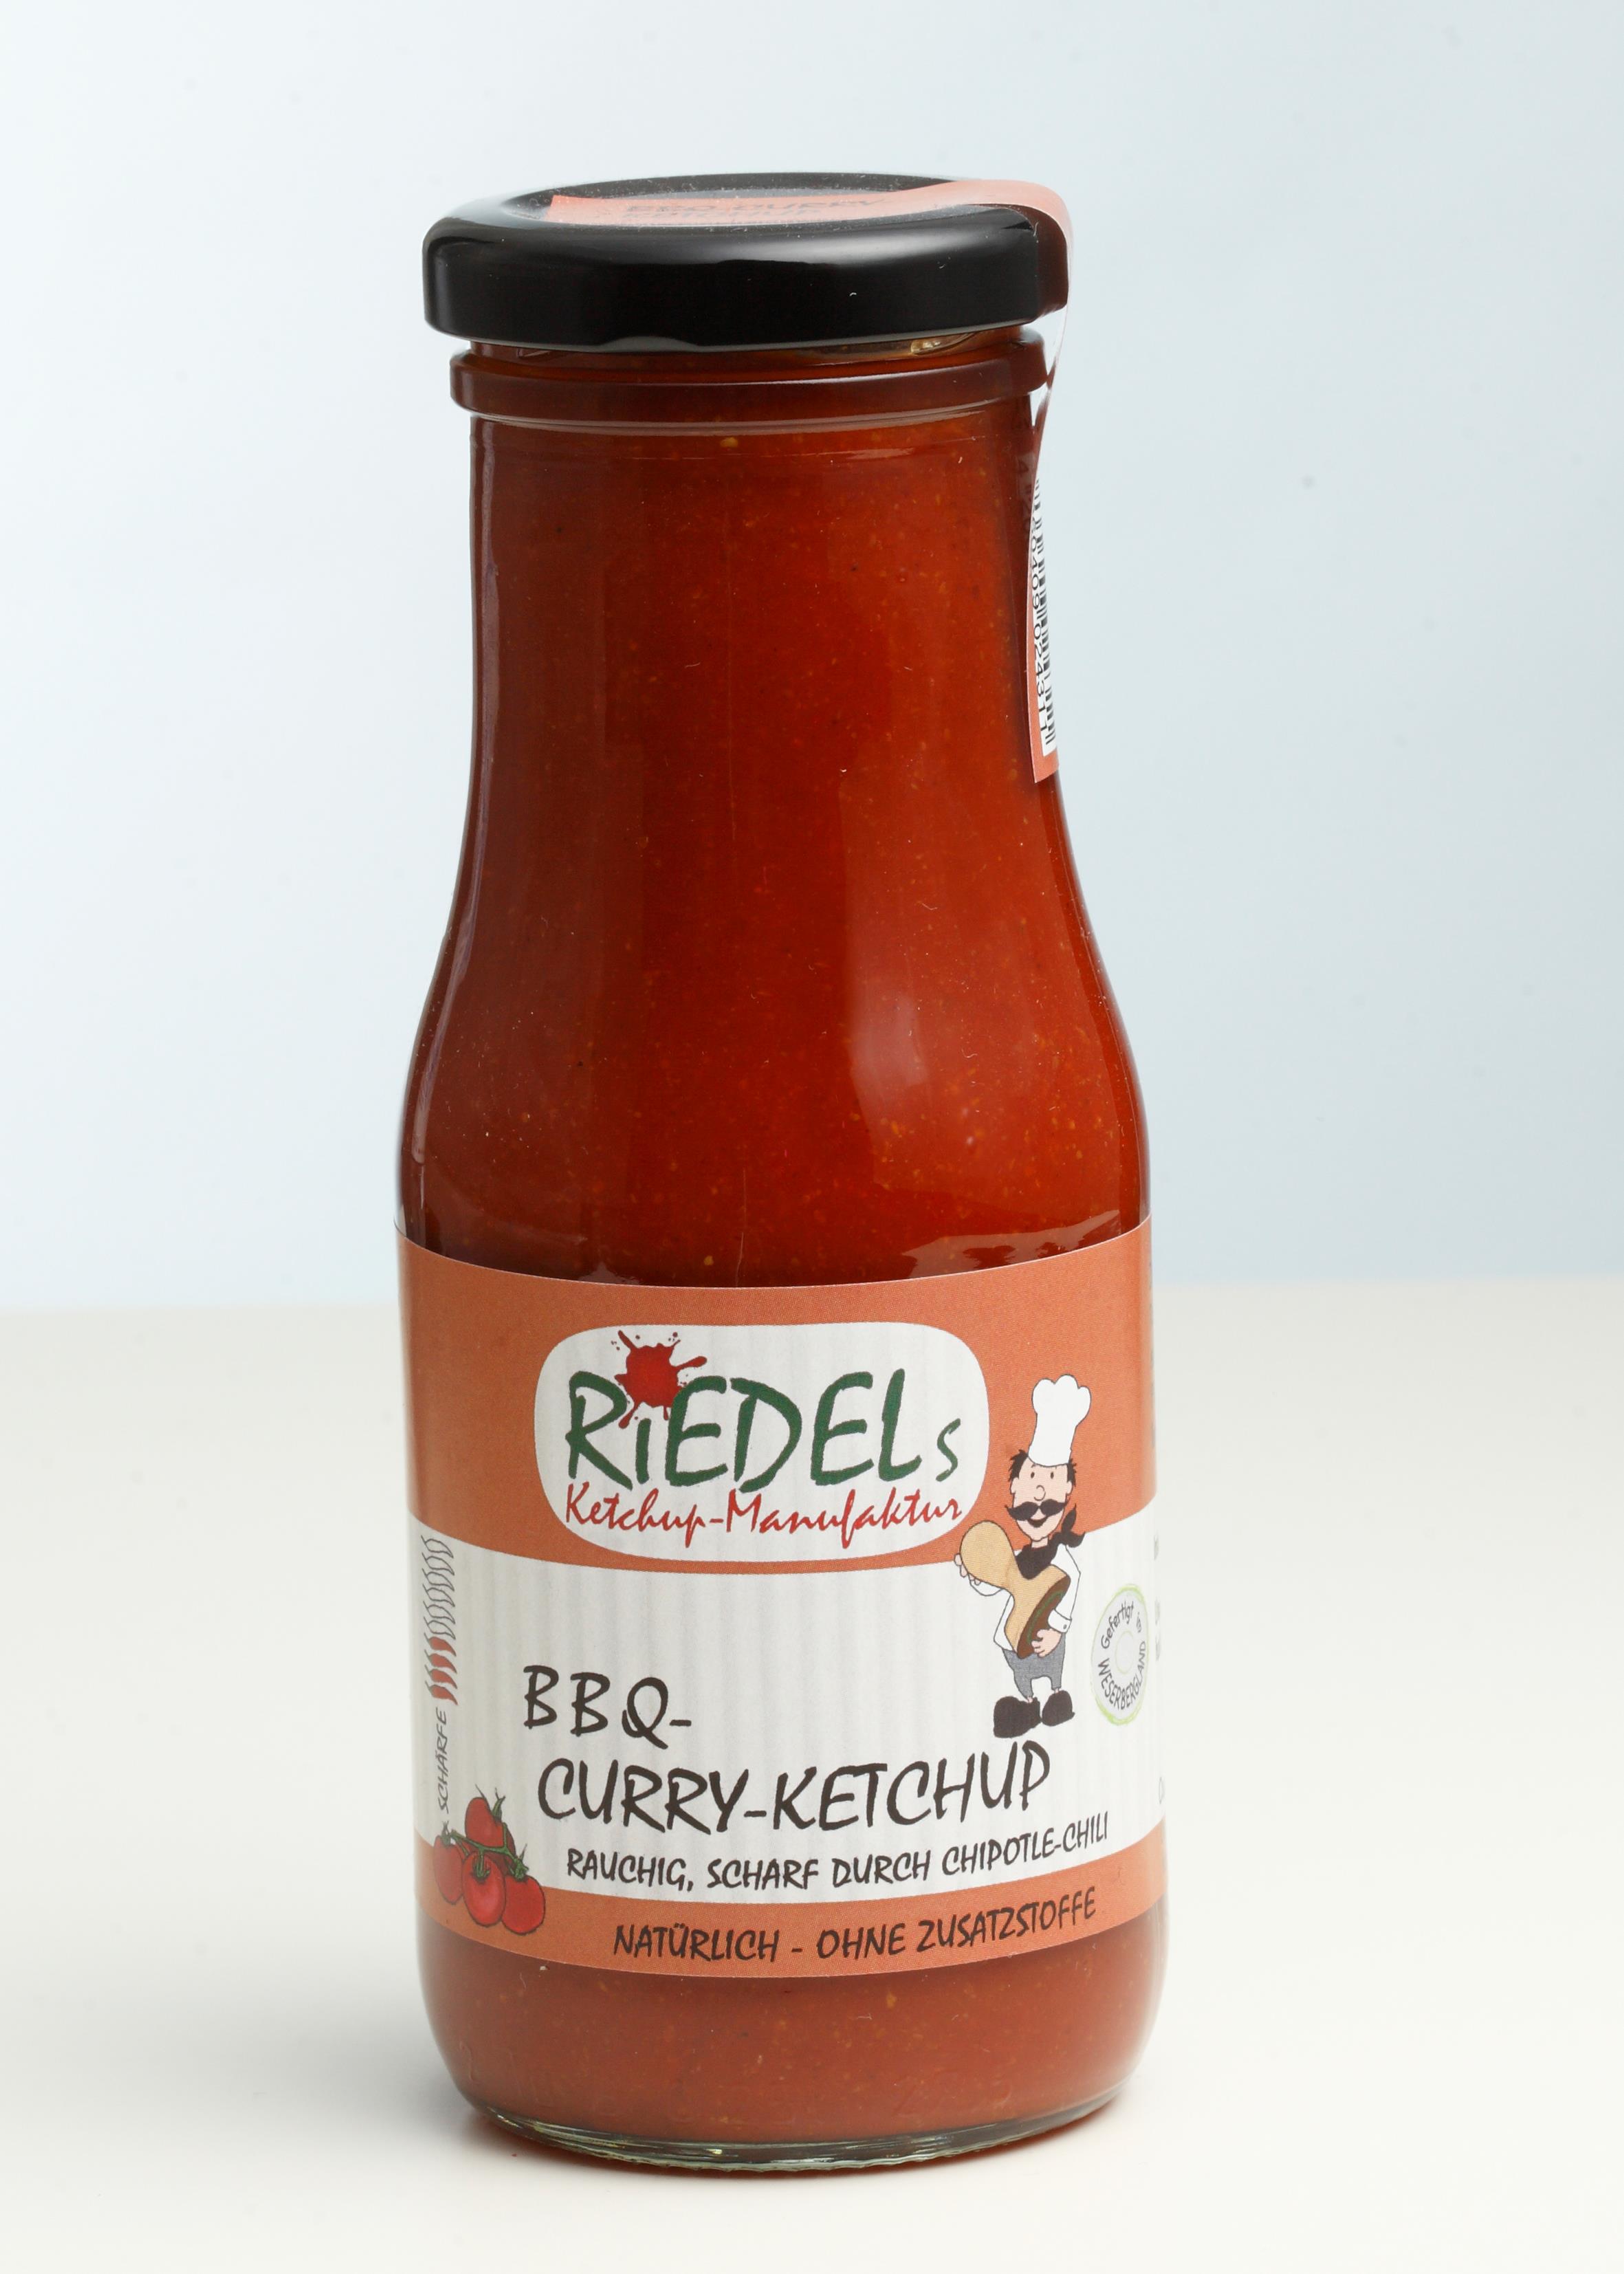 BBQ-Curry-Ketchup 250ml 